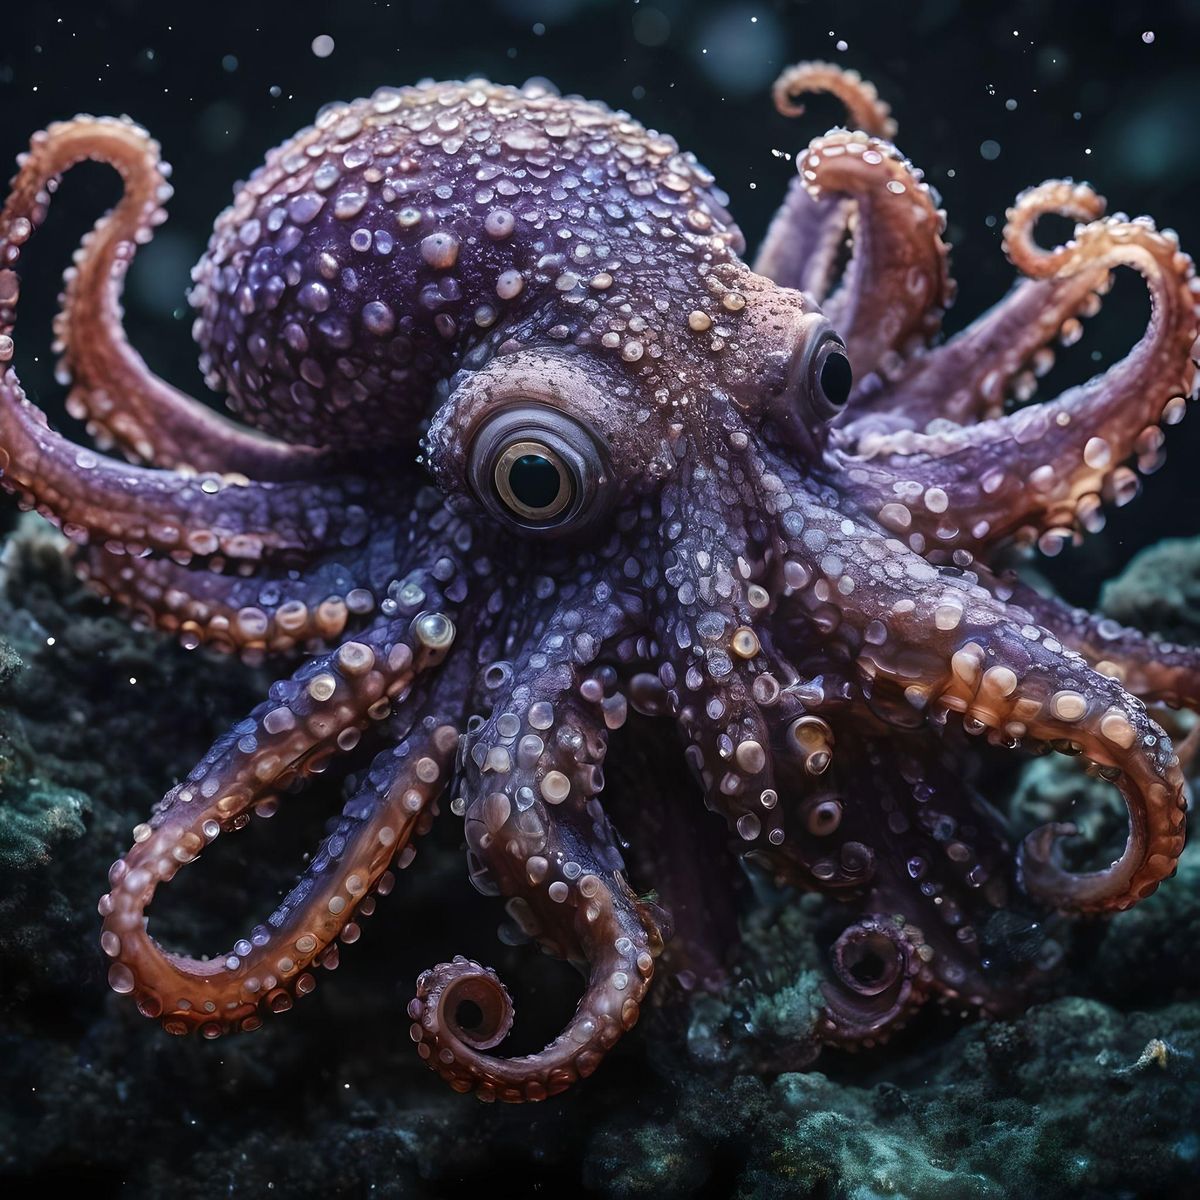 Starry galaxy octopus 